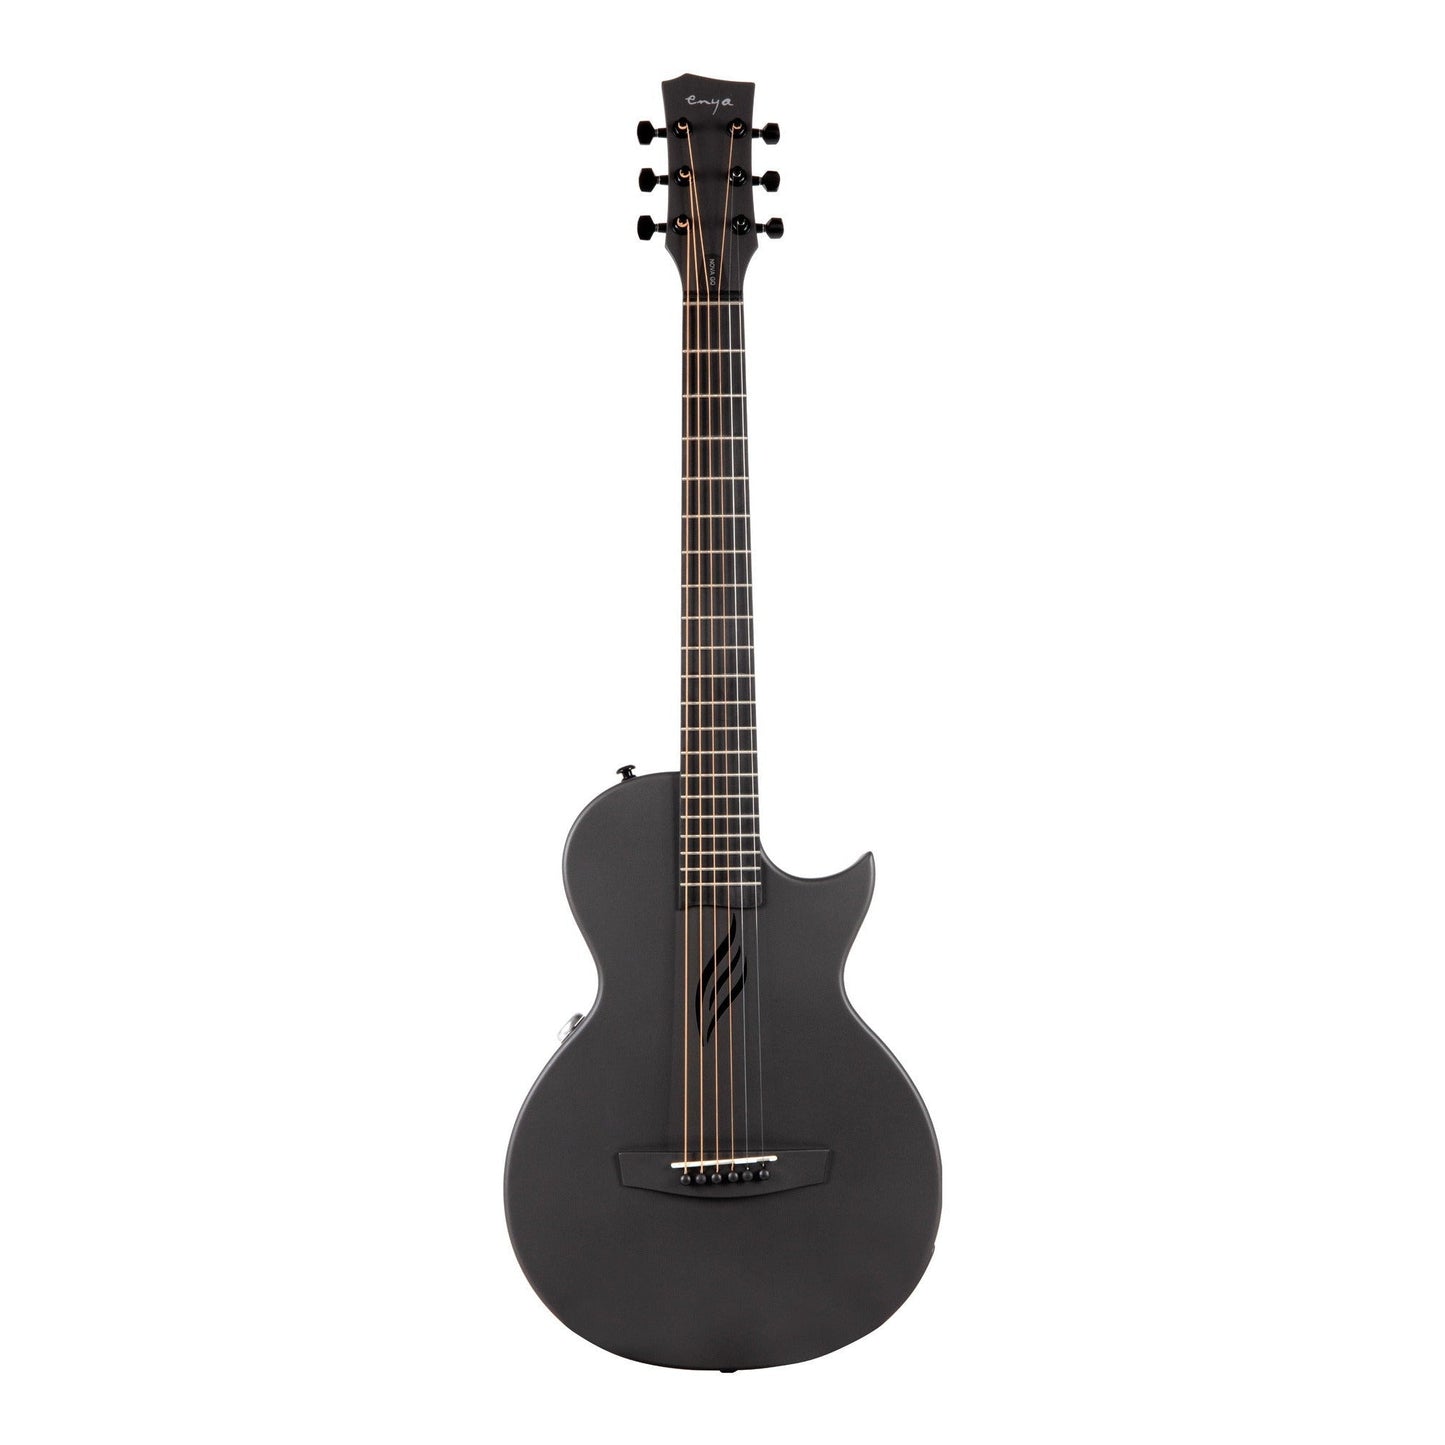 Đàn Guitar Enya Nova Go SP1 AcousticPlus - Black